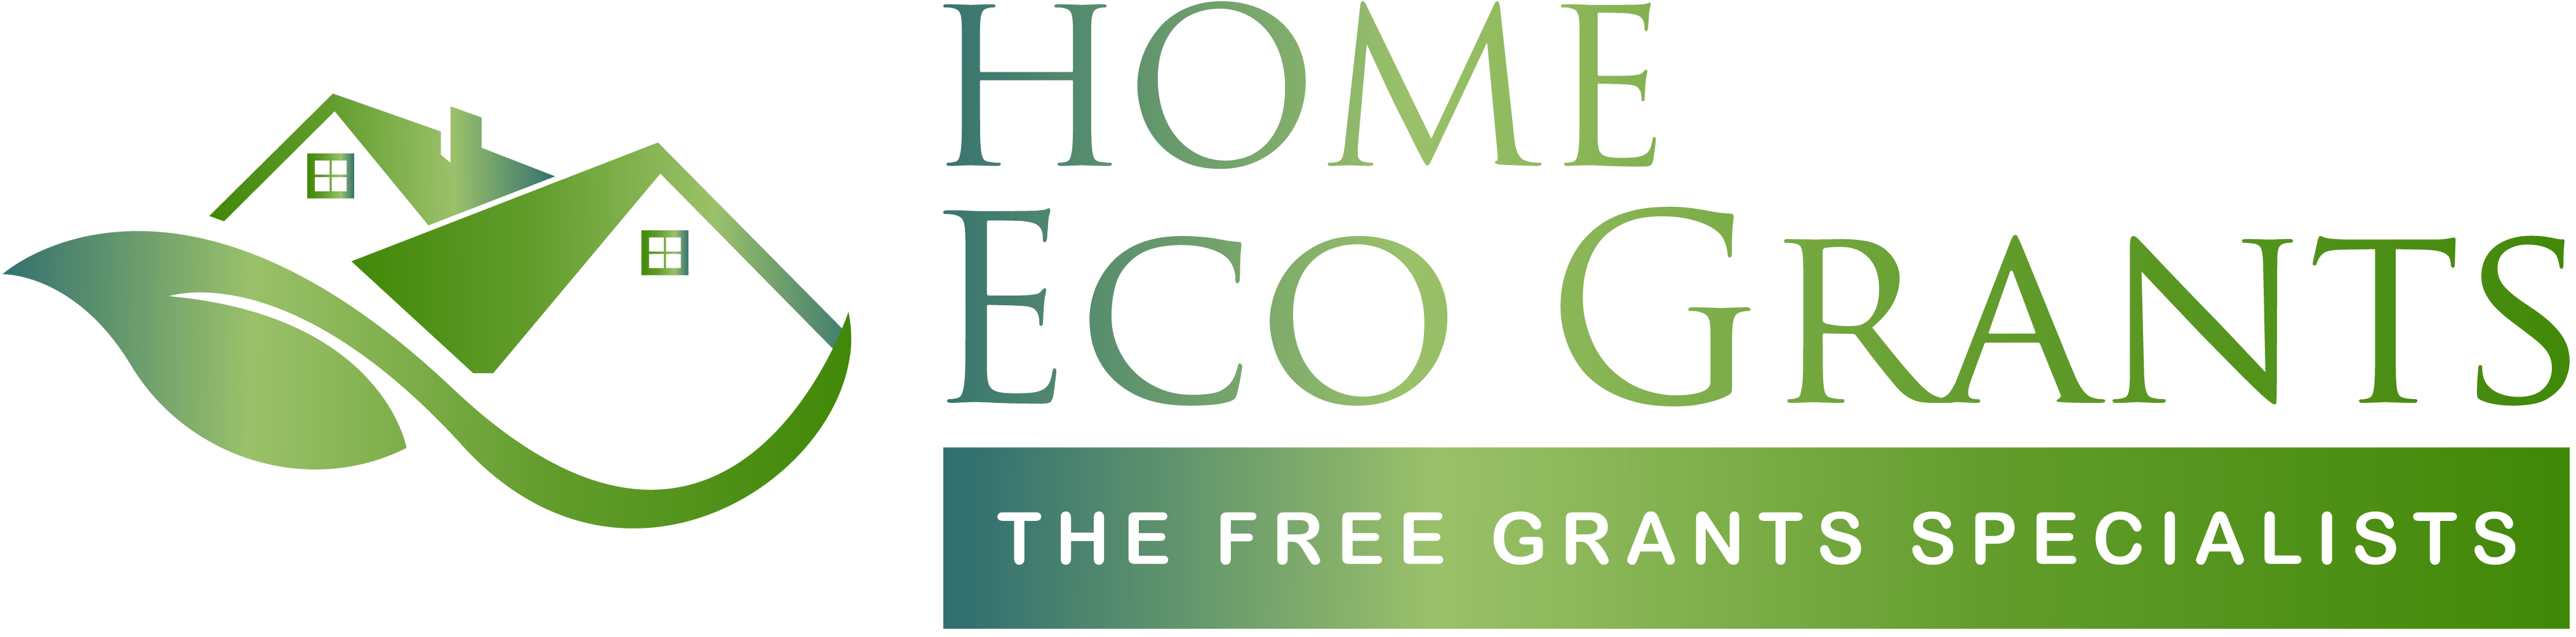 Home Eco Grants